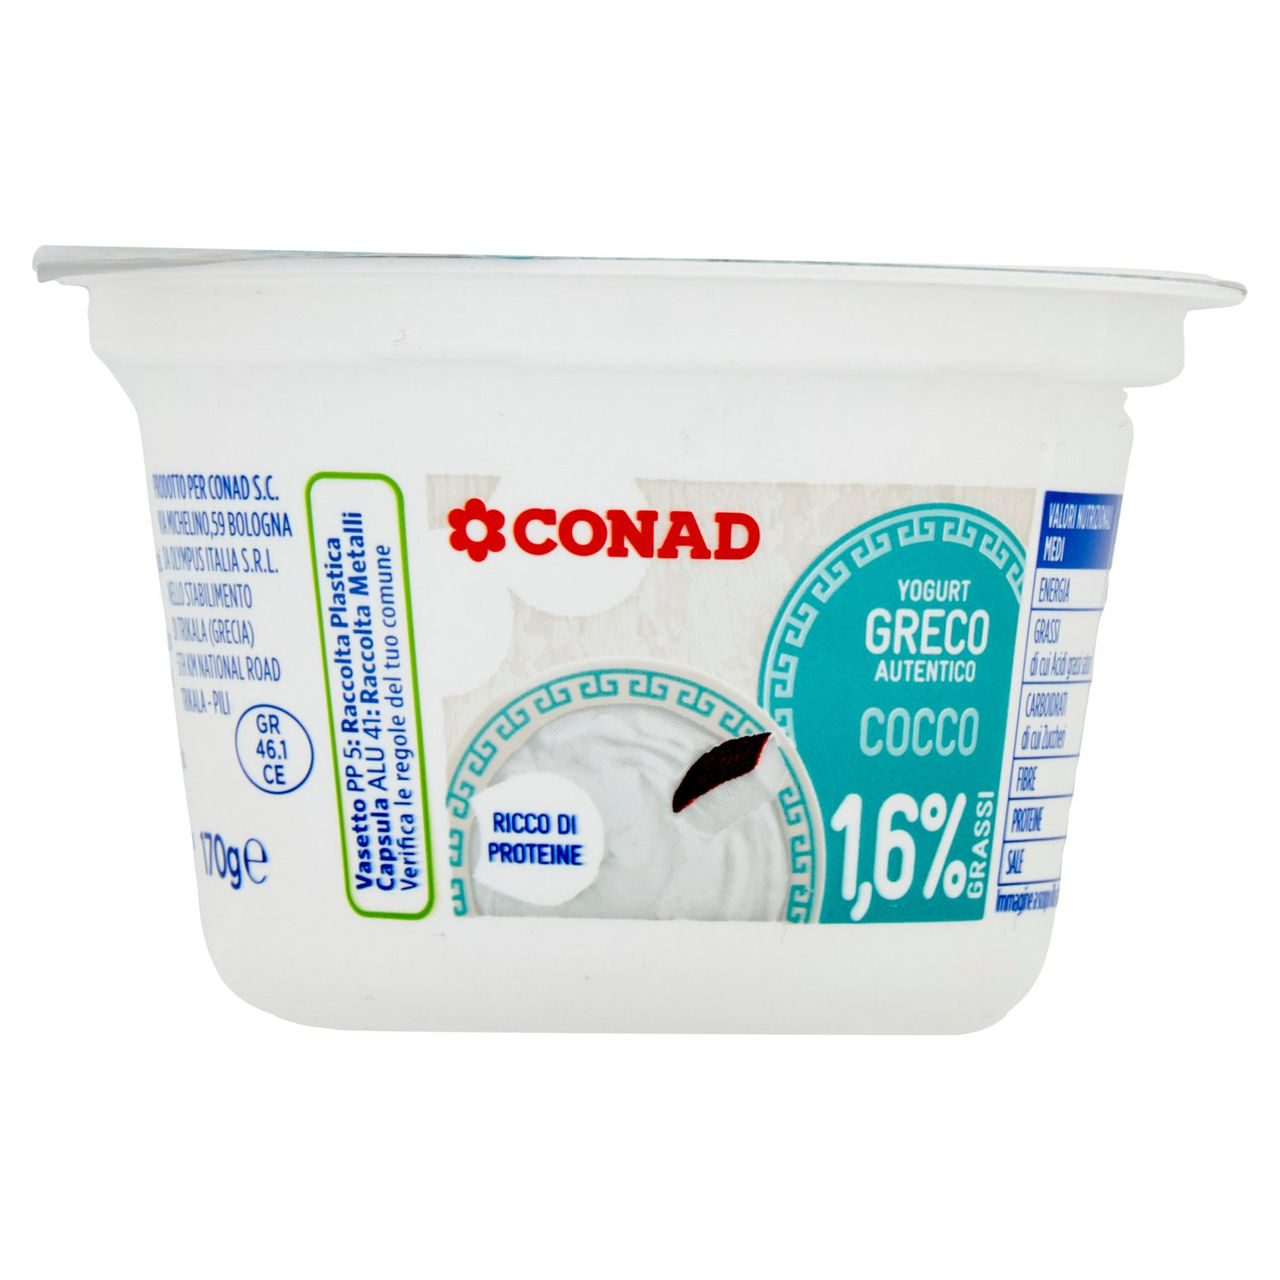 Carrefour Extra Yogurt Greco Cocco 170 g